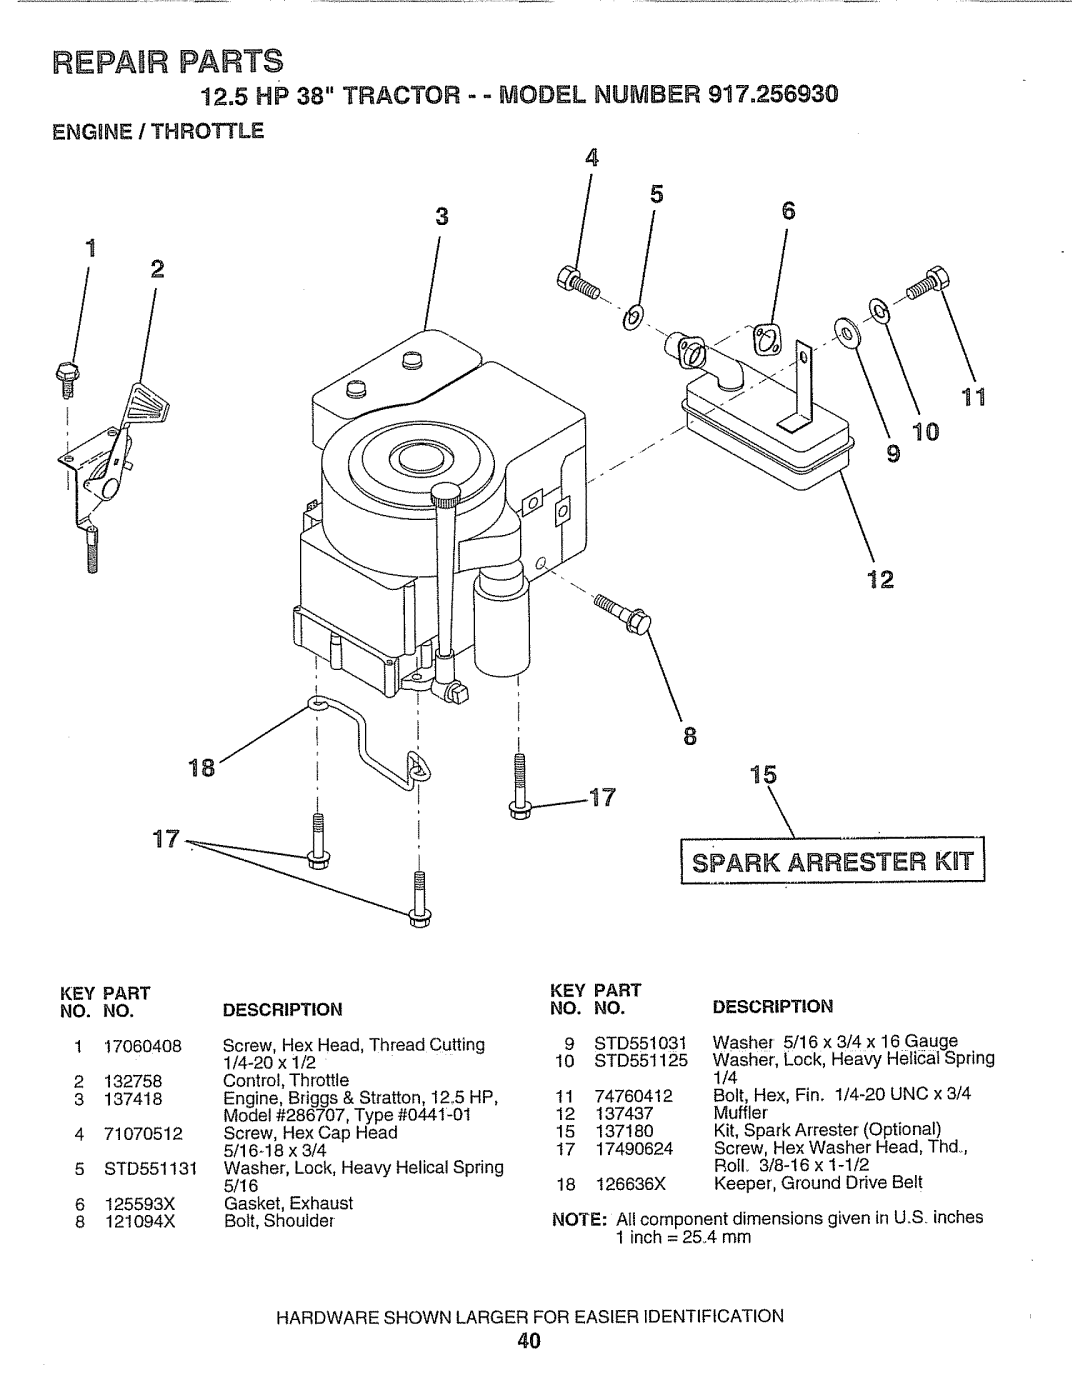 Craftsman 917.25693 Repair Parts, 11 30 9 12, 12.5 HP 38 TRACTOR -..MODEL NUMBER, Engine / Throttle, Description 